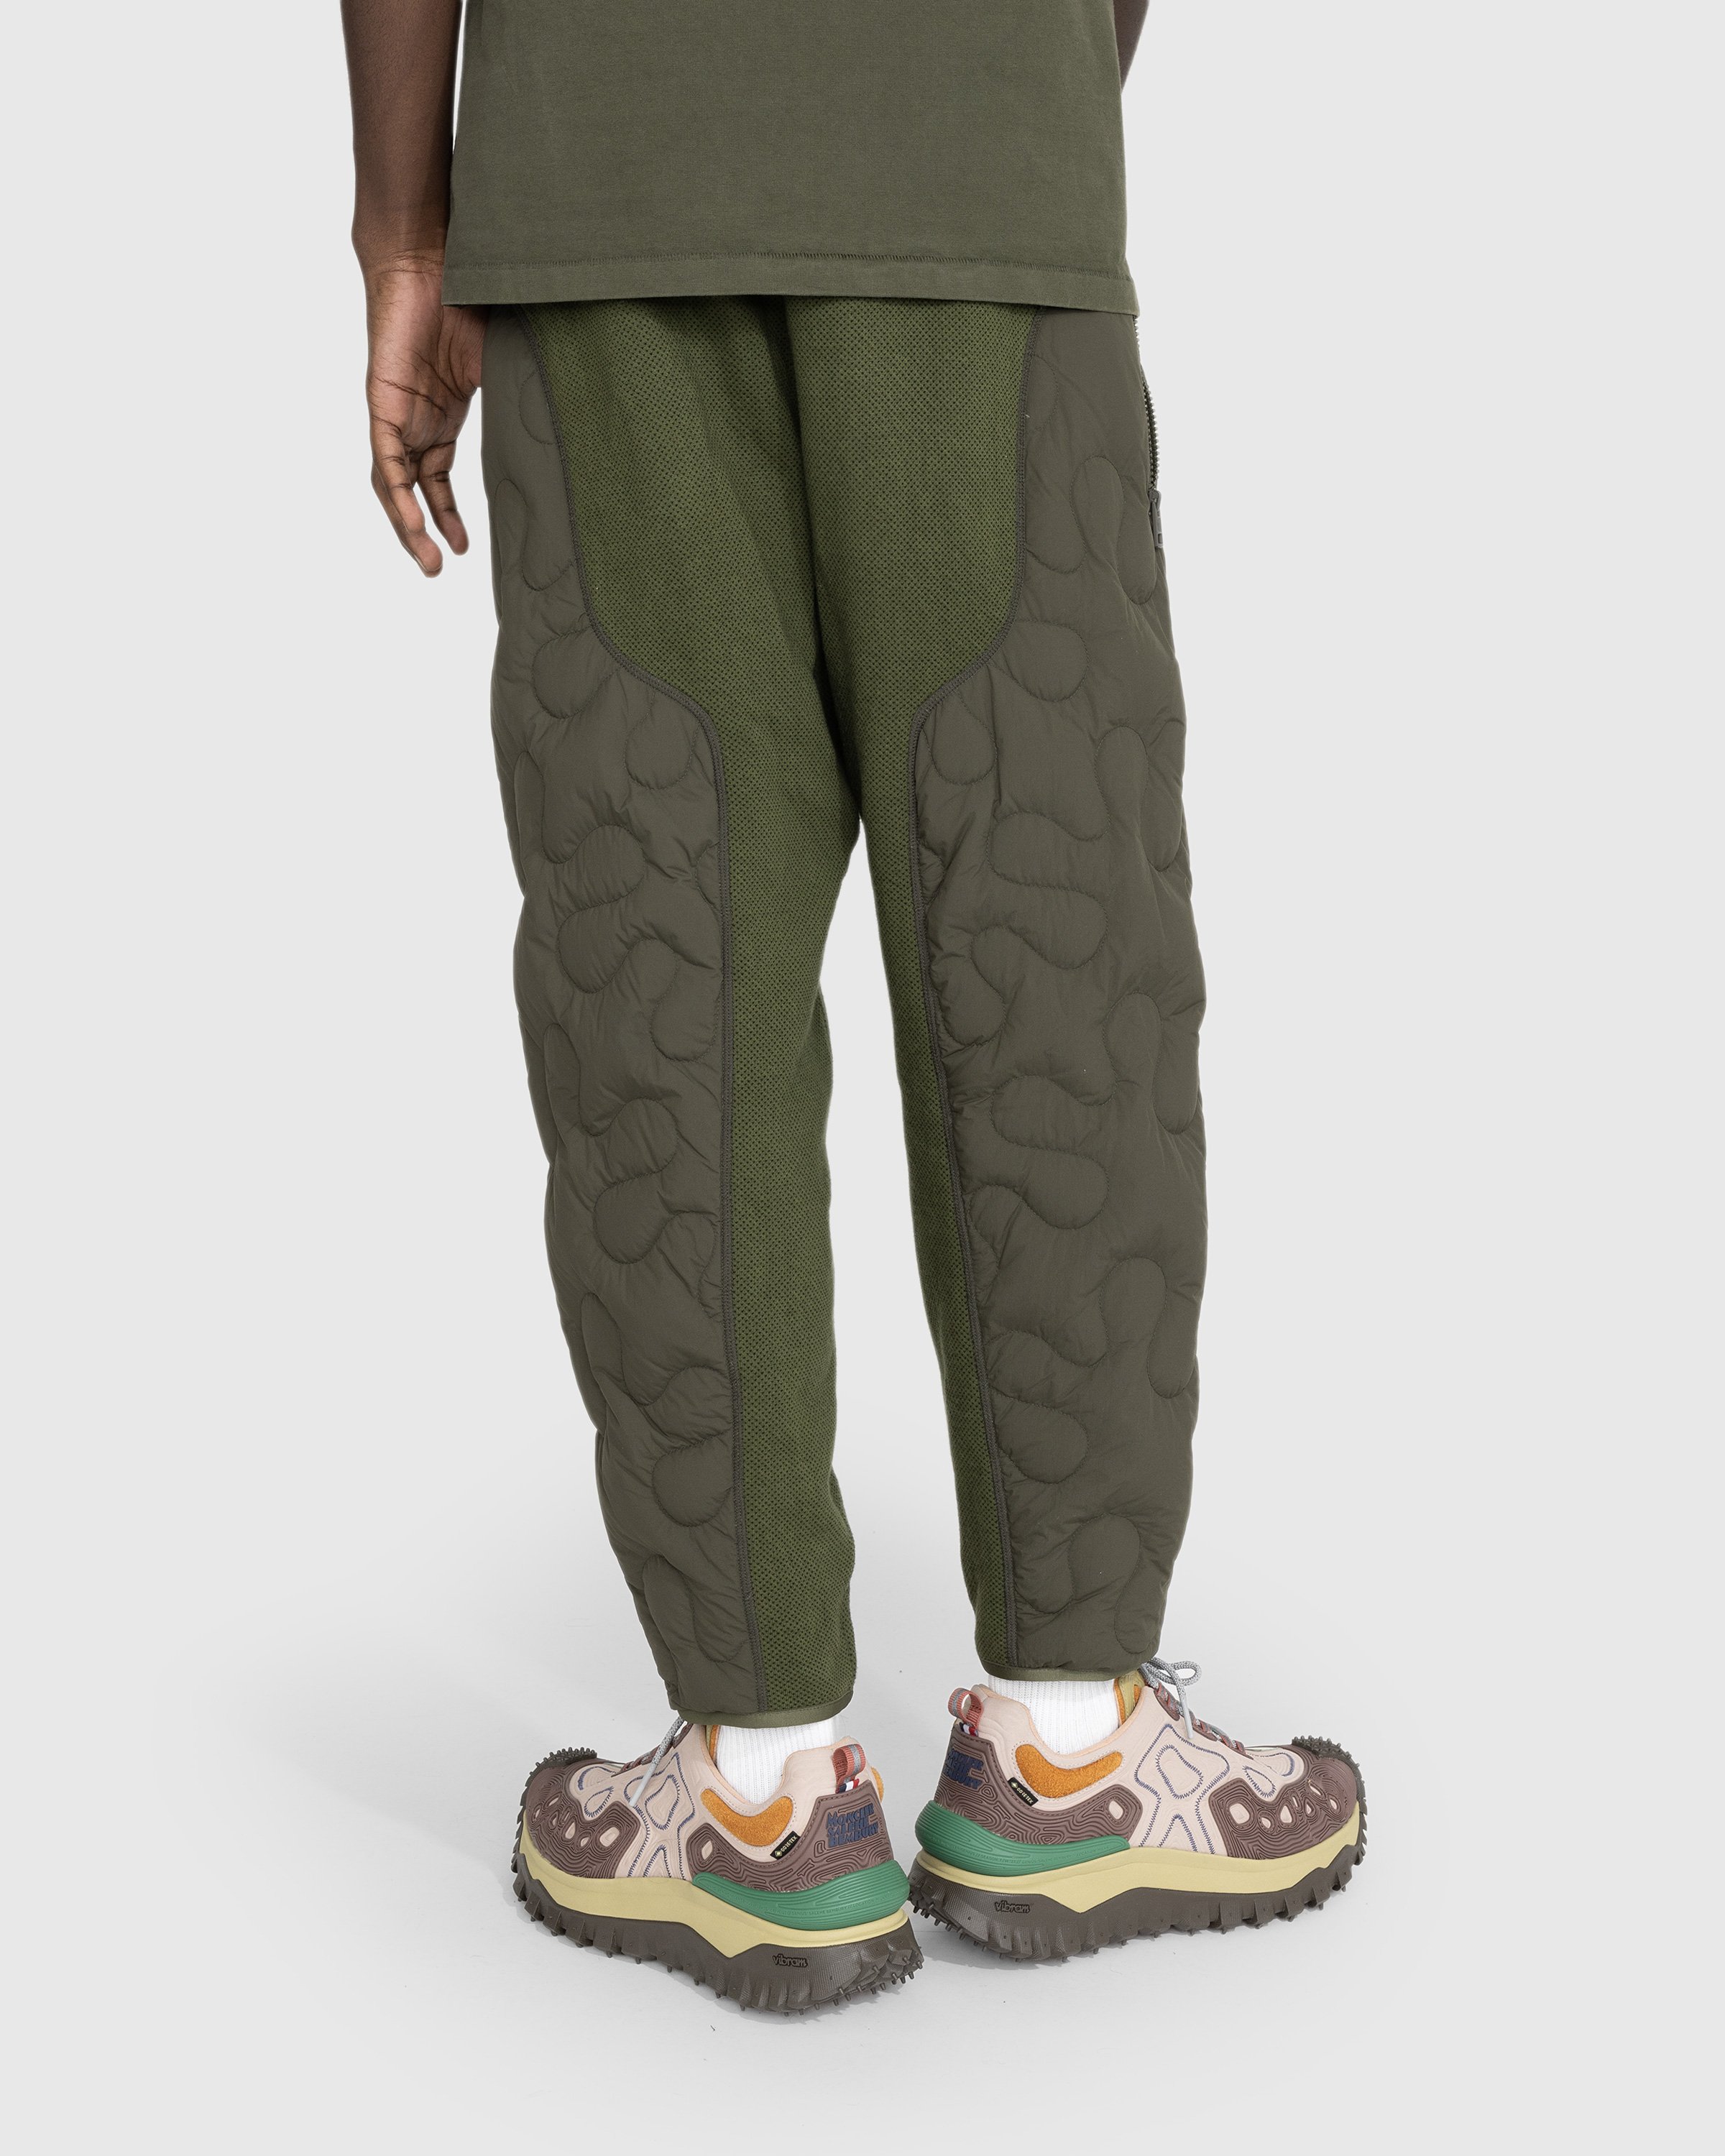 Moncler x Salehe Bembury – Padded Pants Green | Highsnobiety Shop